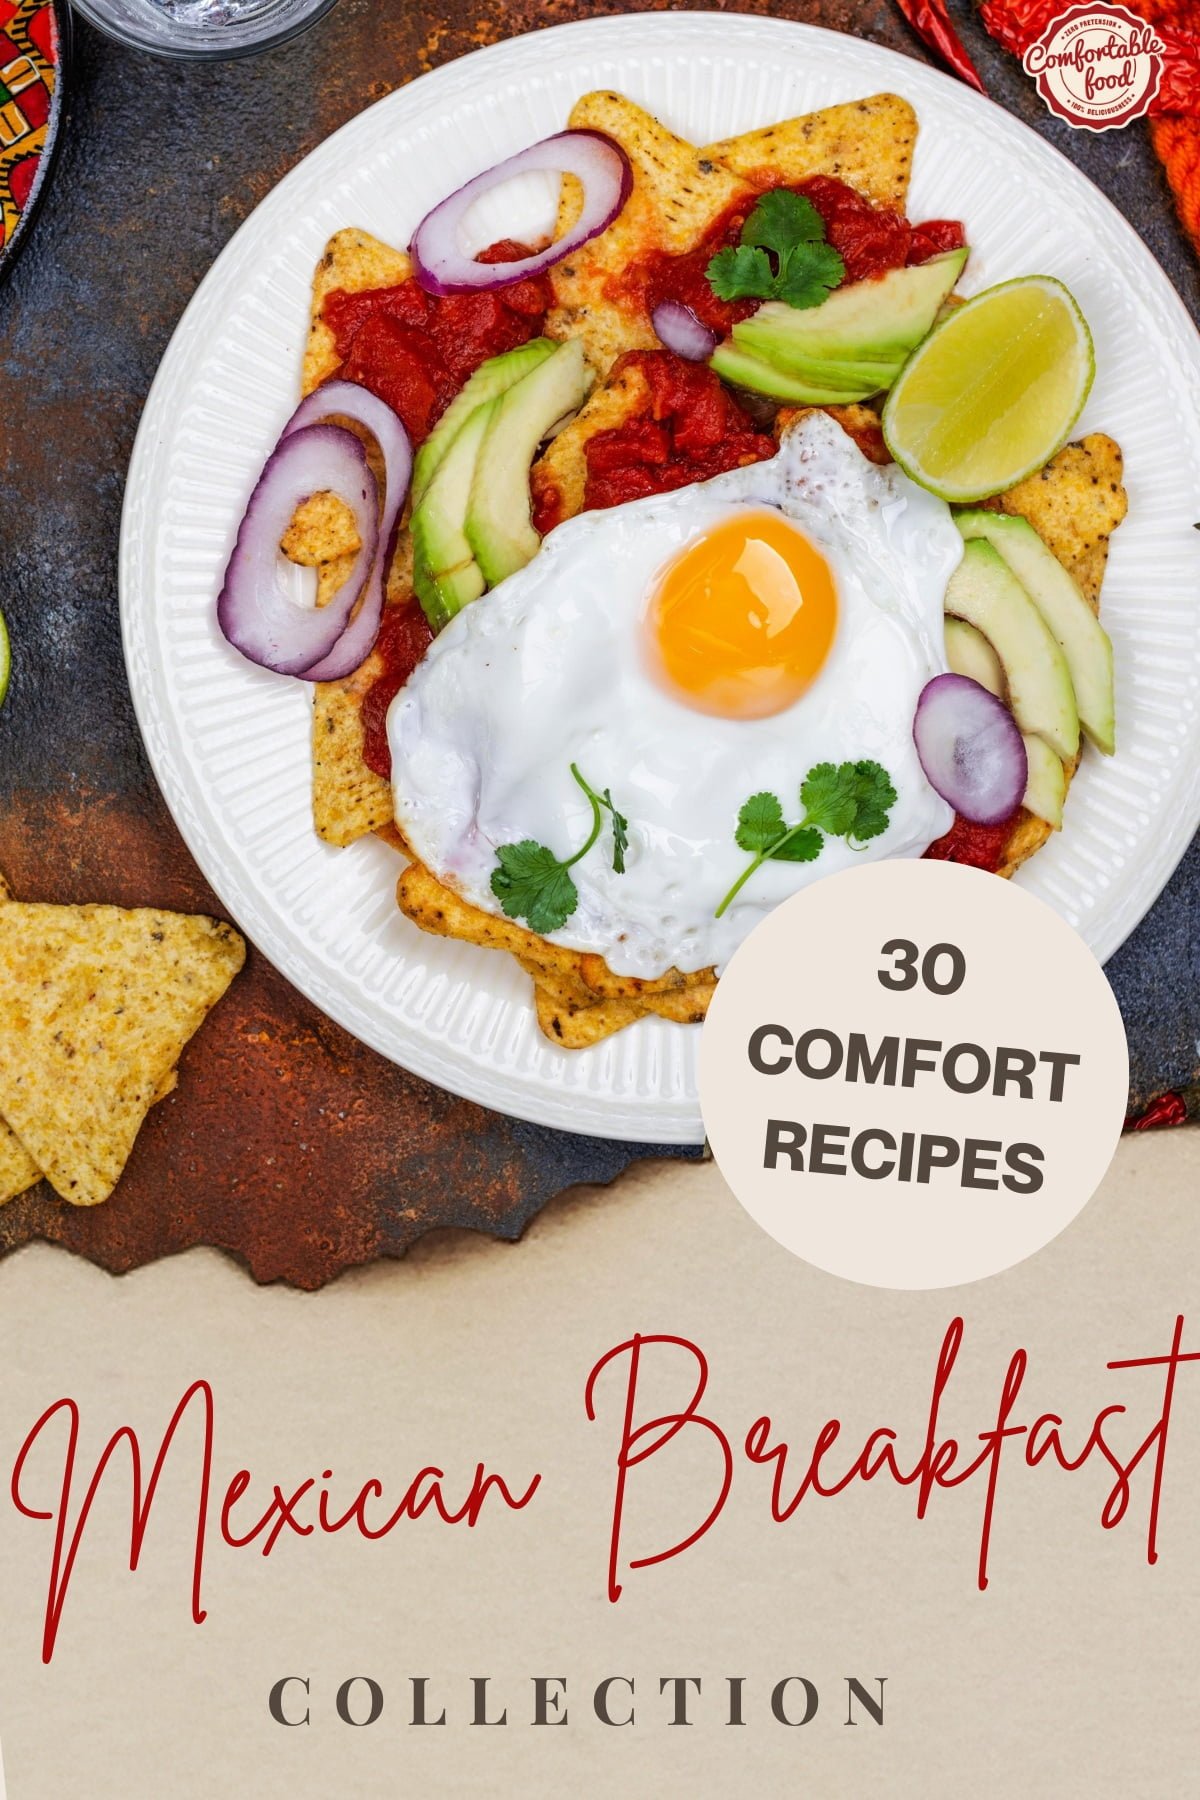 Mexican breakfast recipes